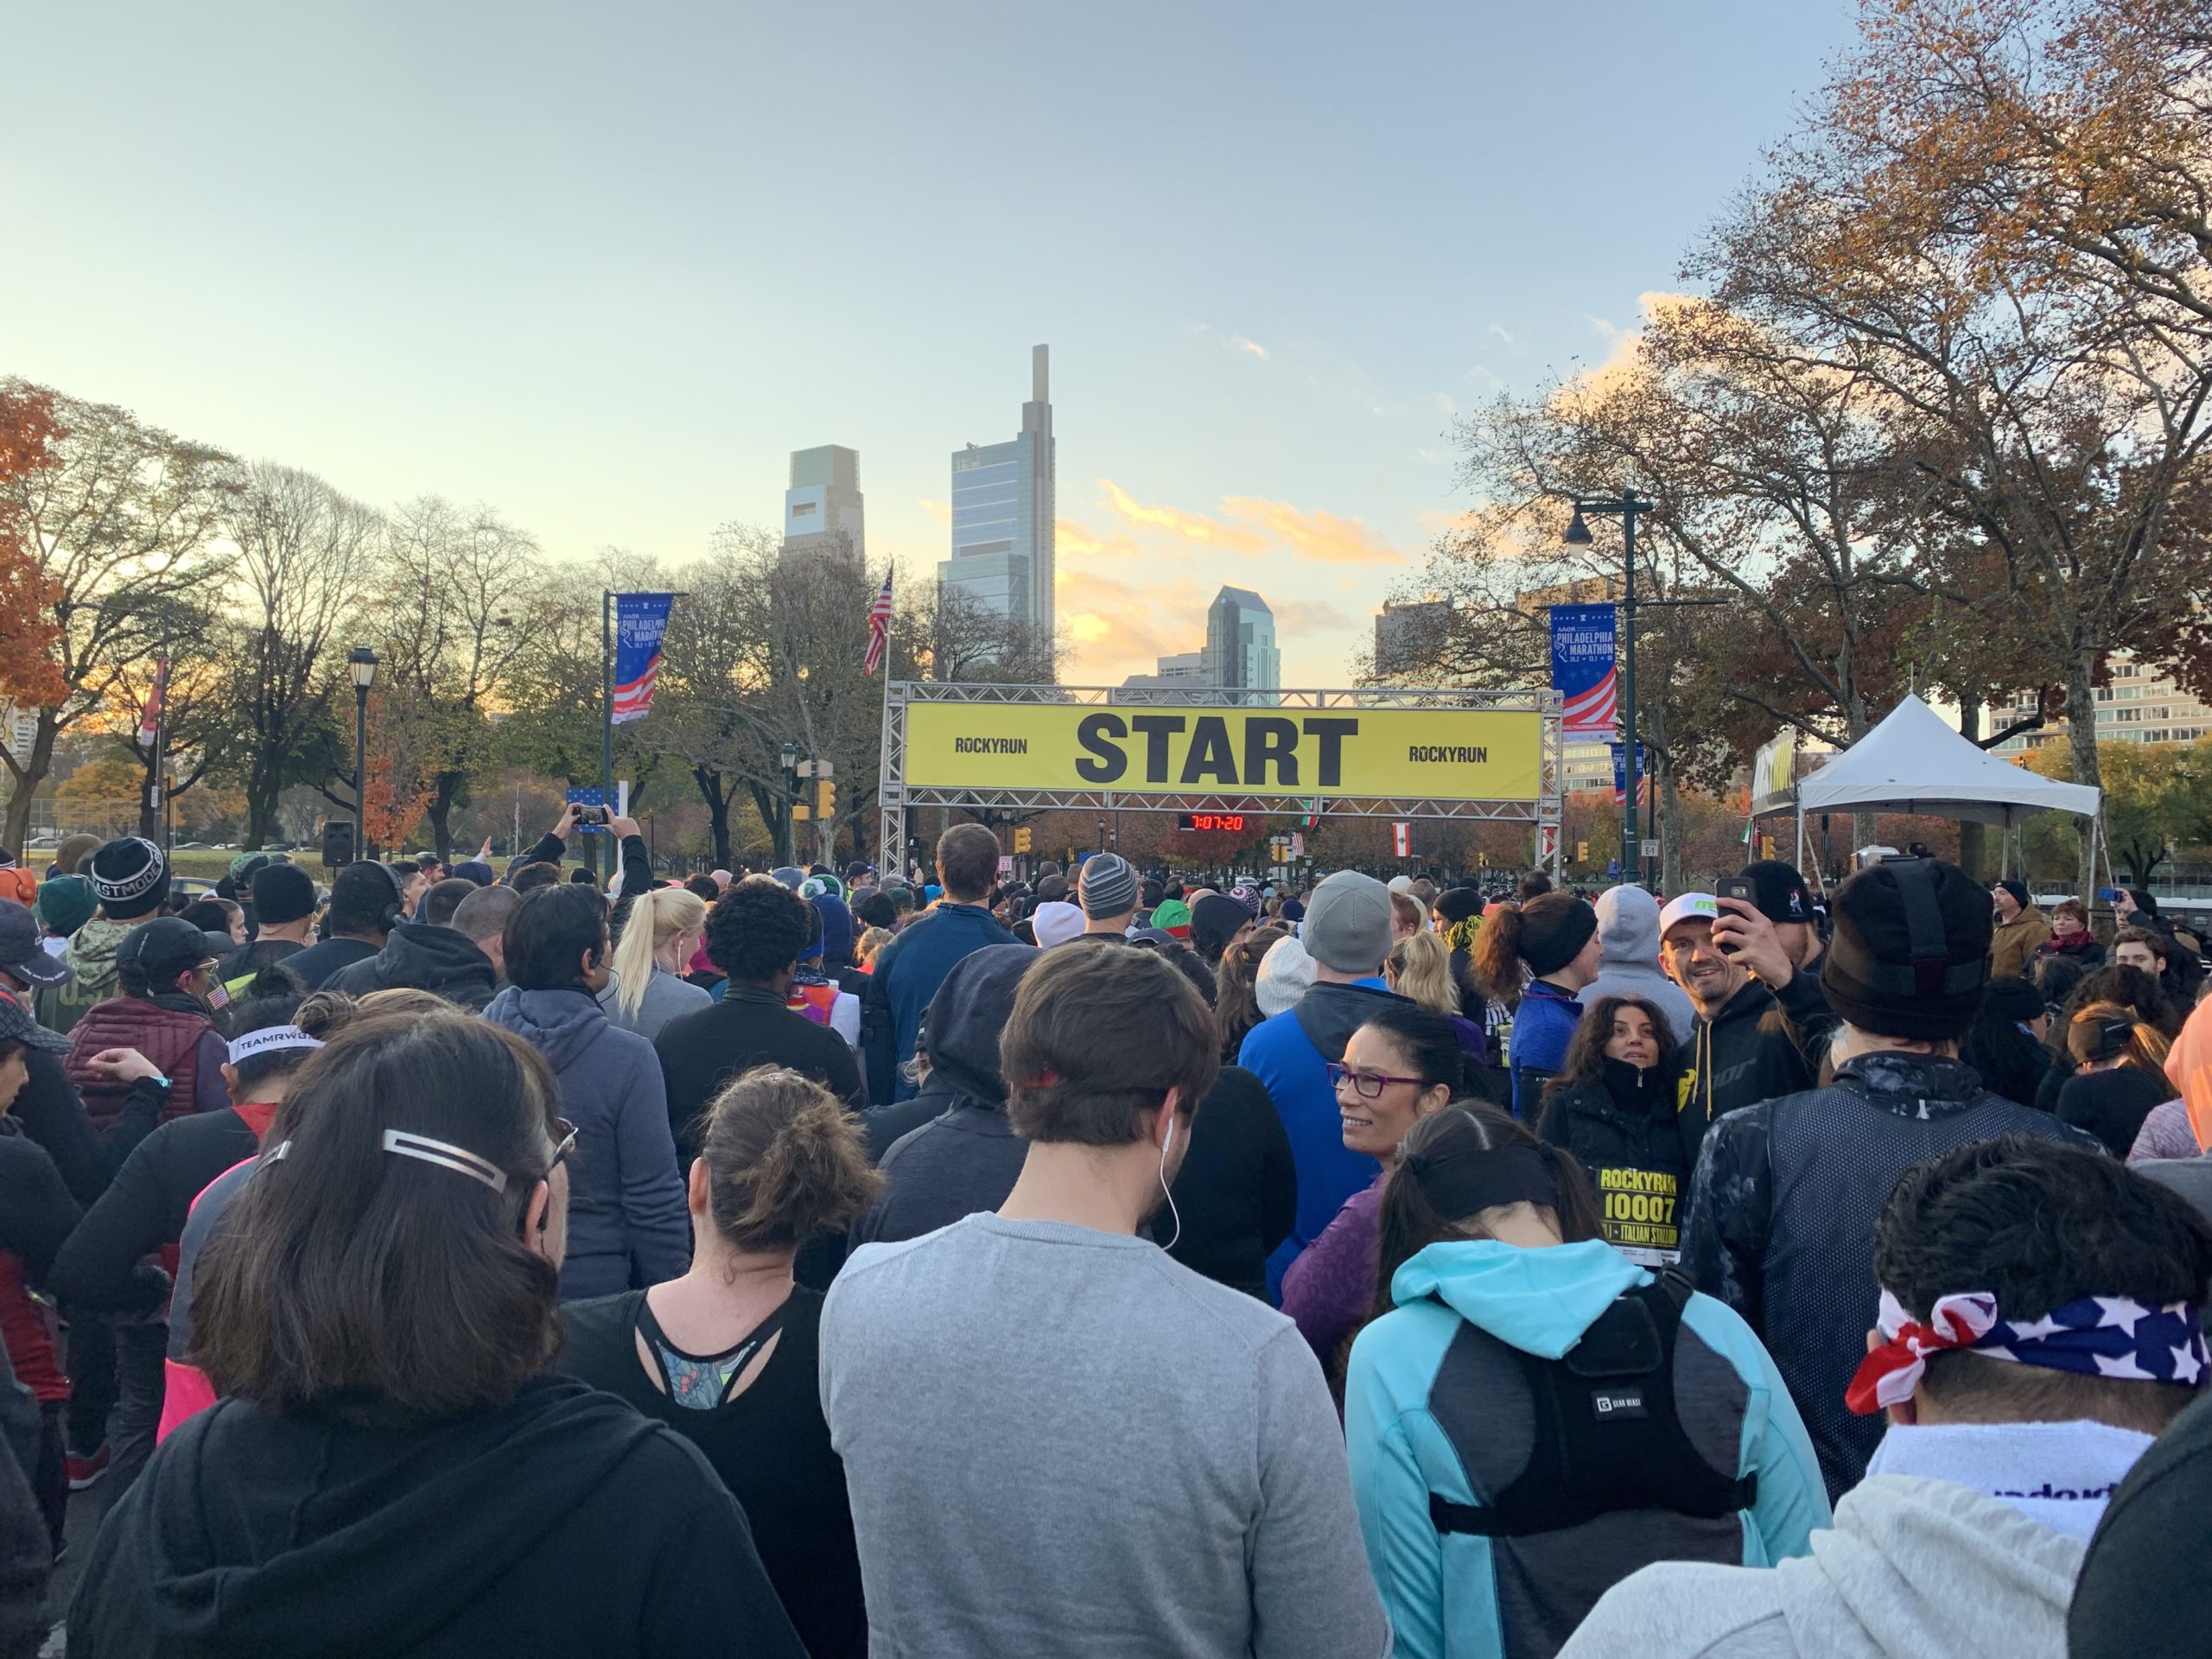 2018 Rocky Run (5K) in Philadelphia, PA